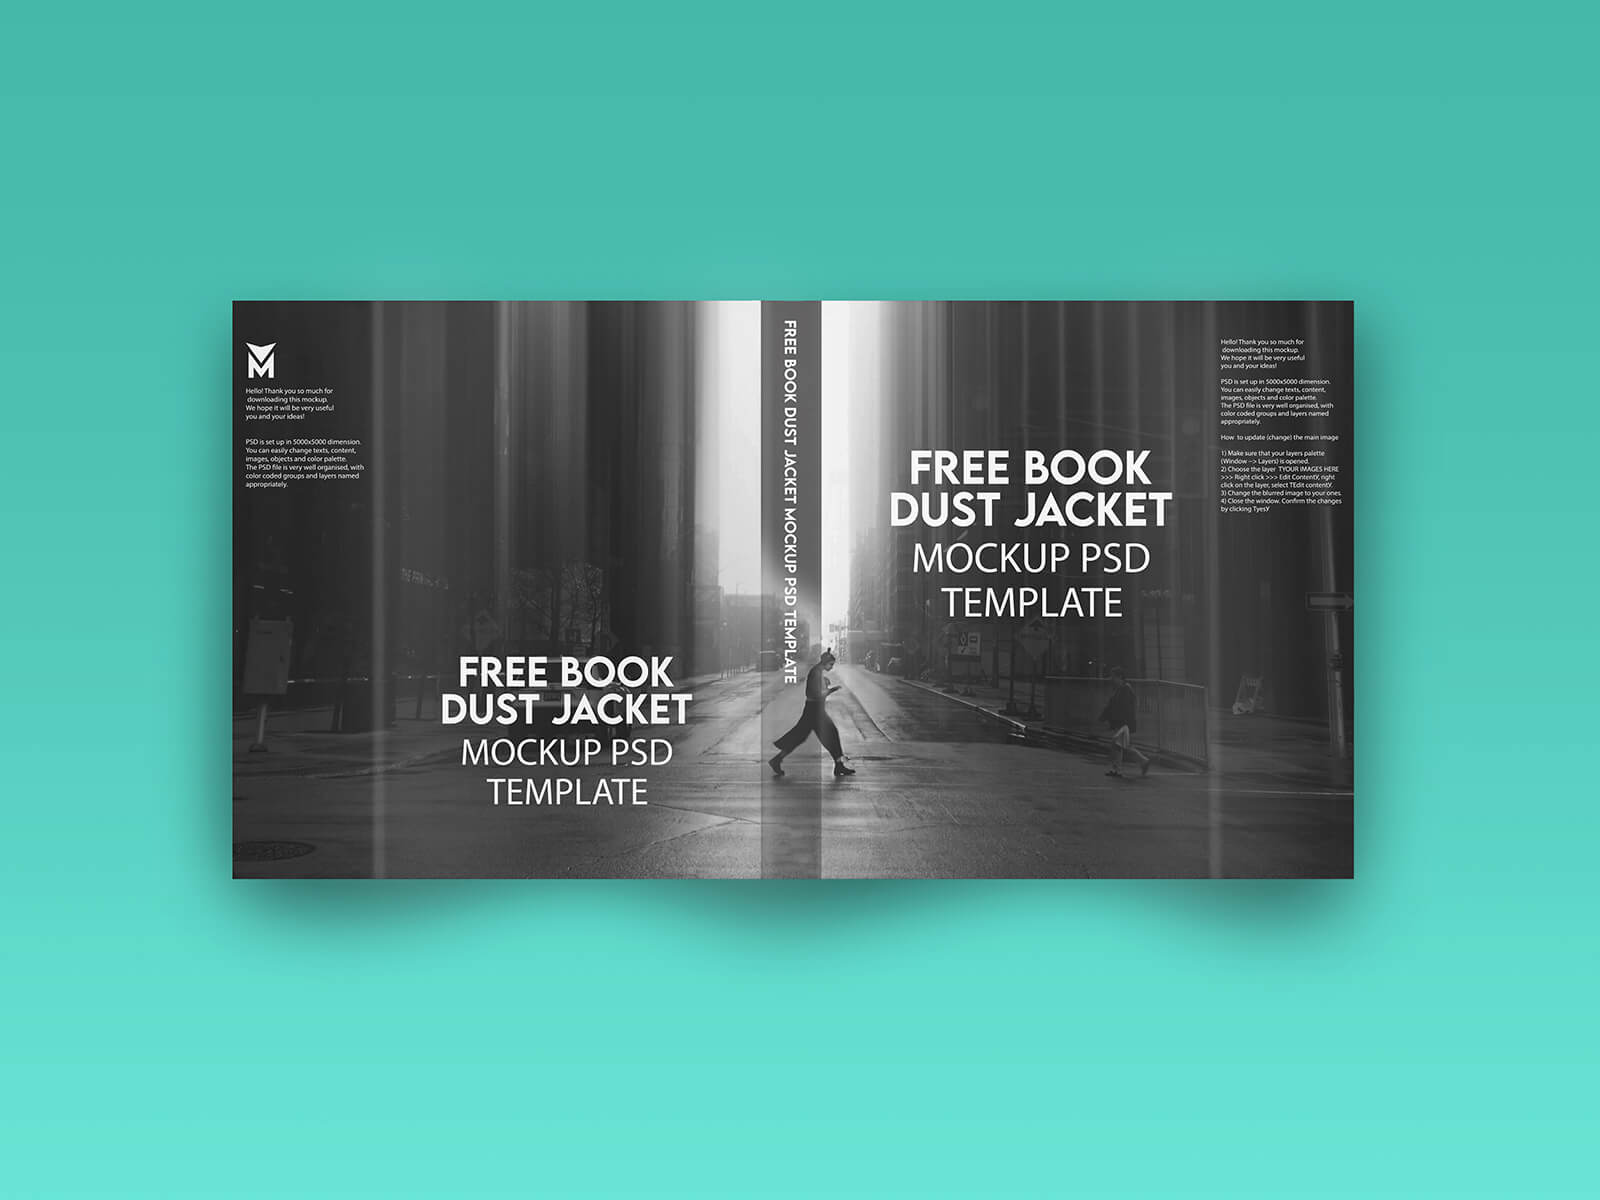 Free Book Dust Jacket Mockup PSD